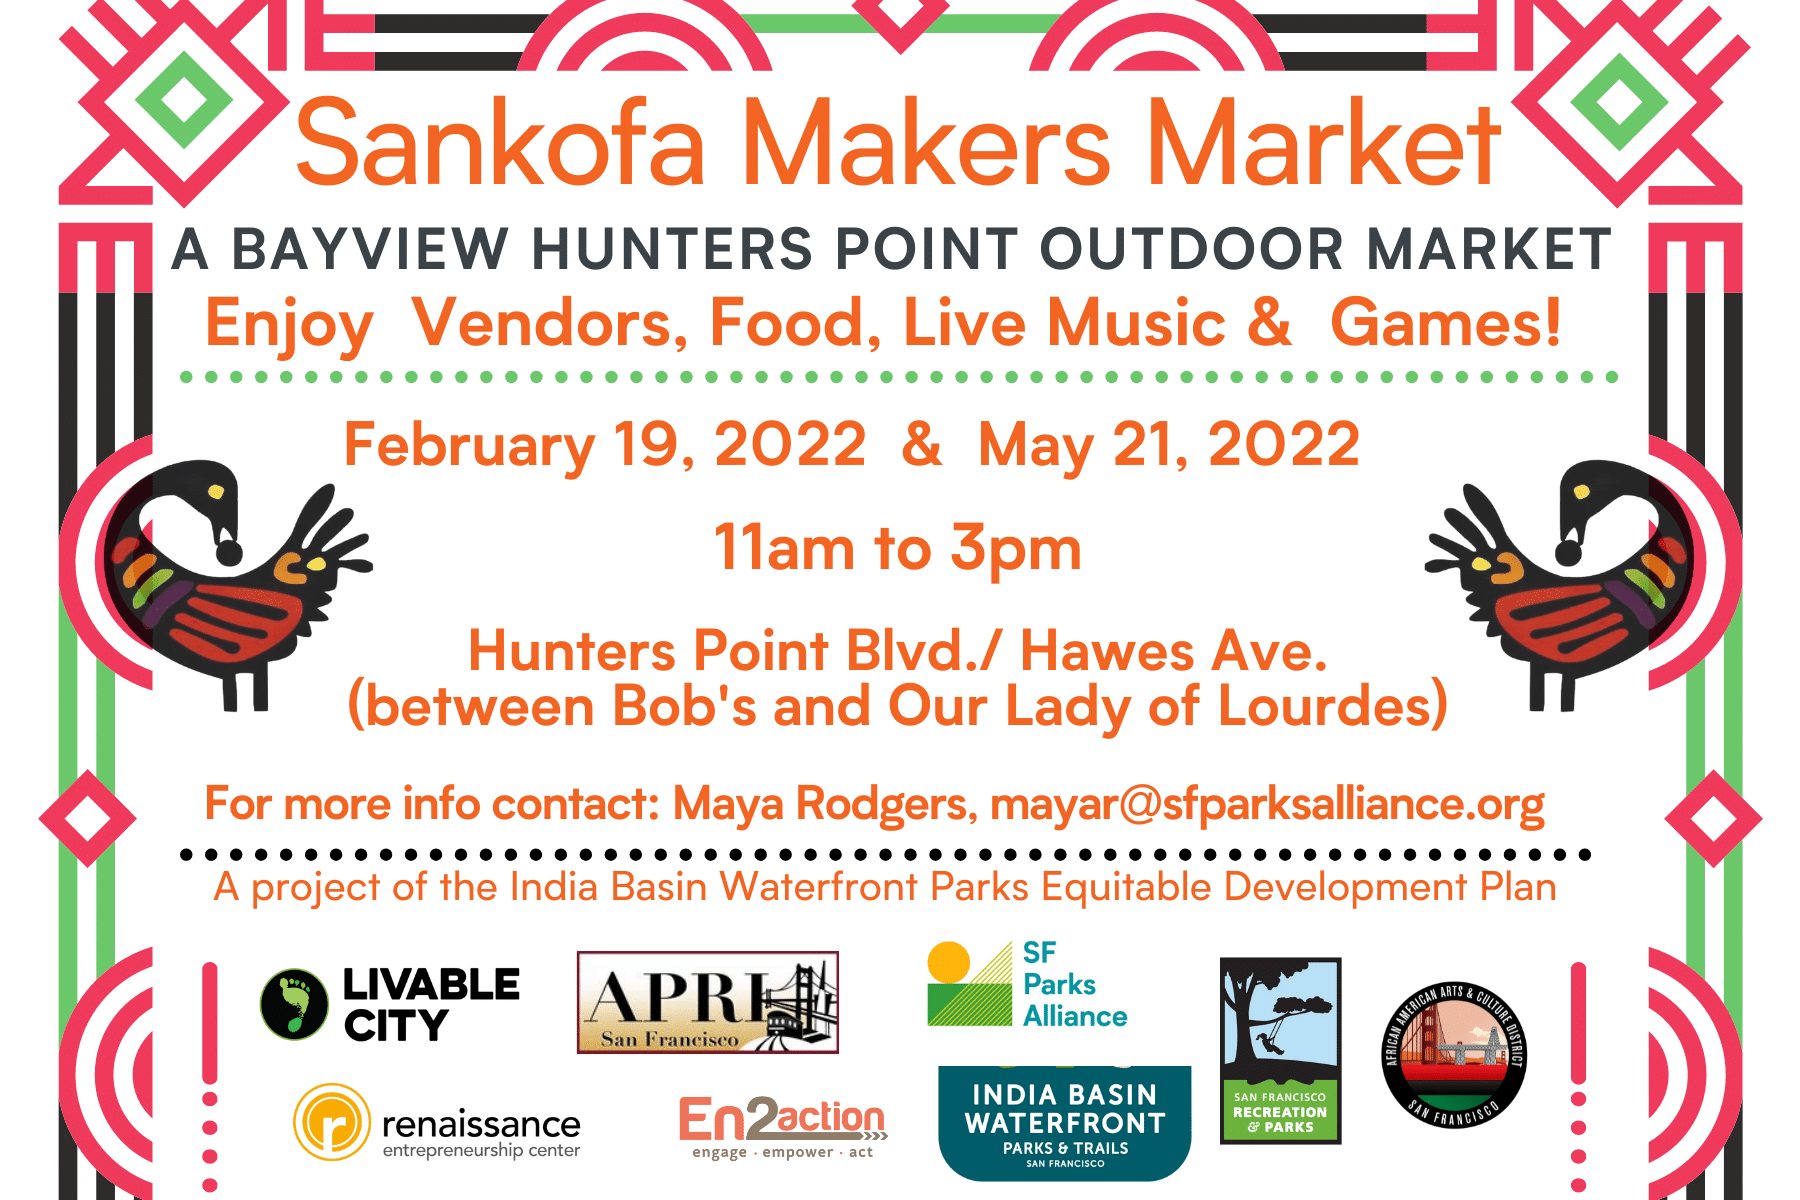 Sankofa Makers Market event logo